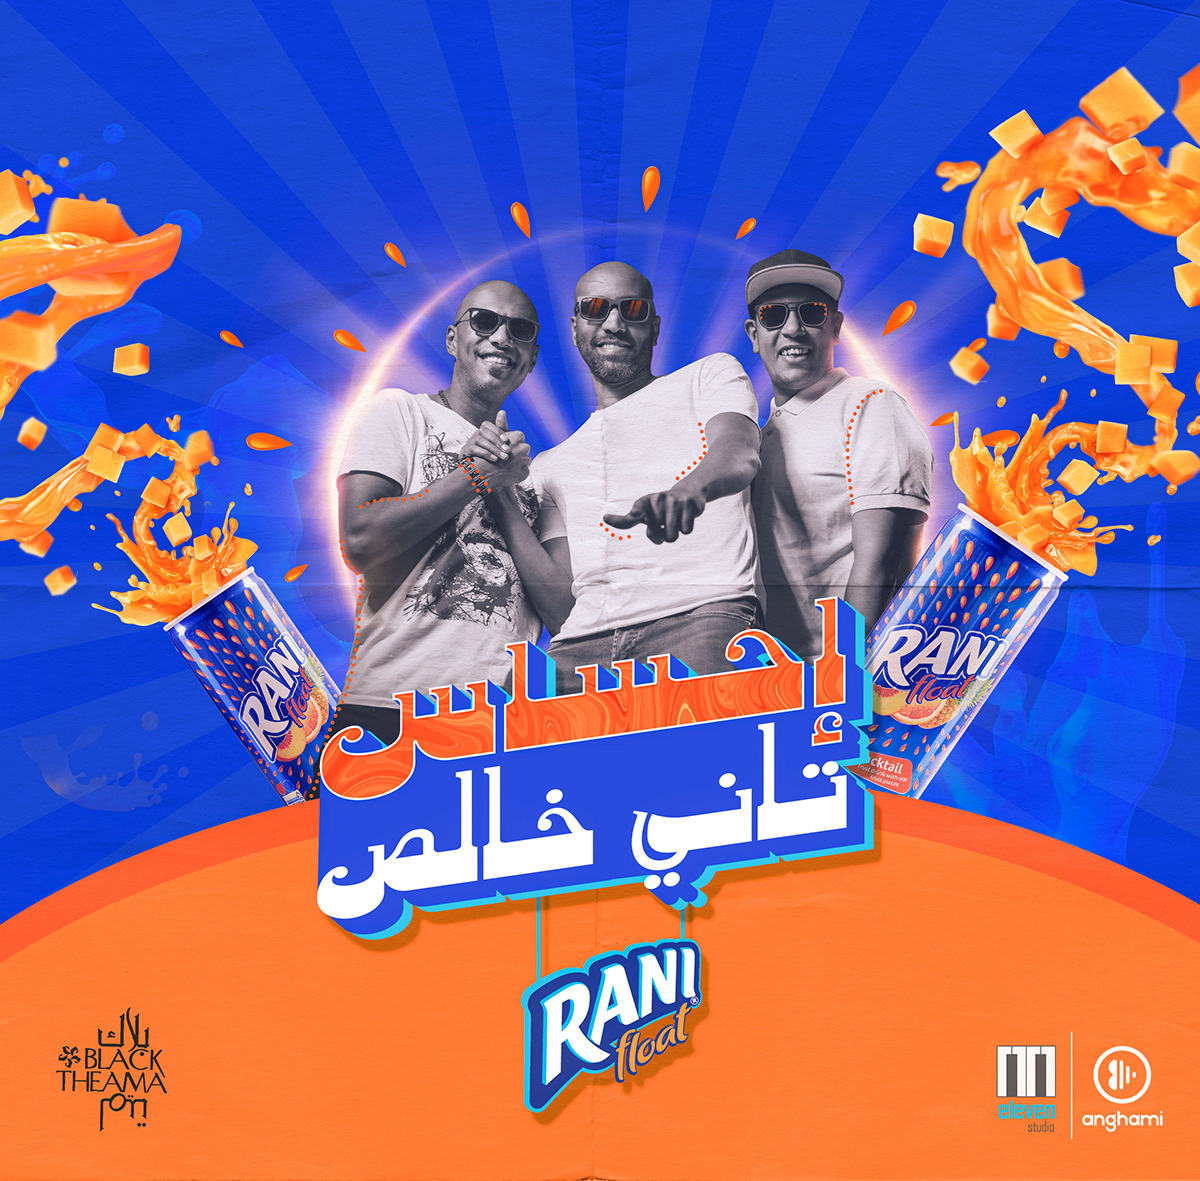 Advertising  anghami blackthema campaign egypt floats Food  media Rani song